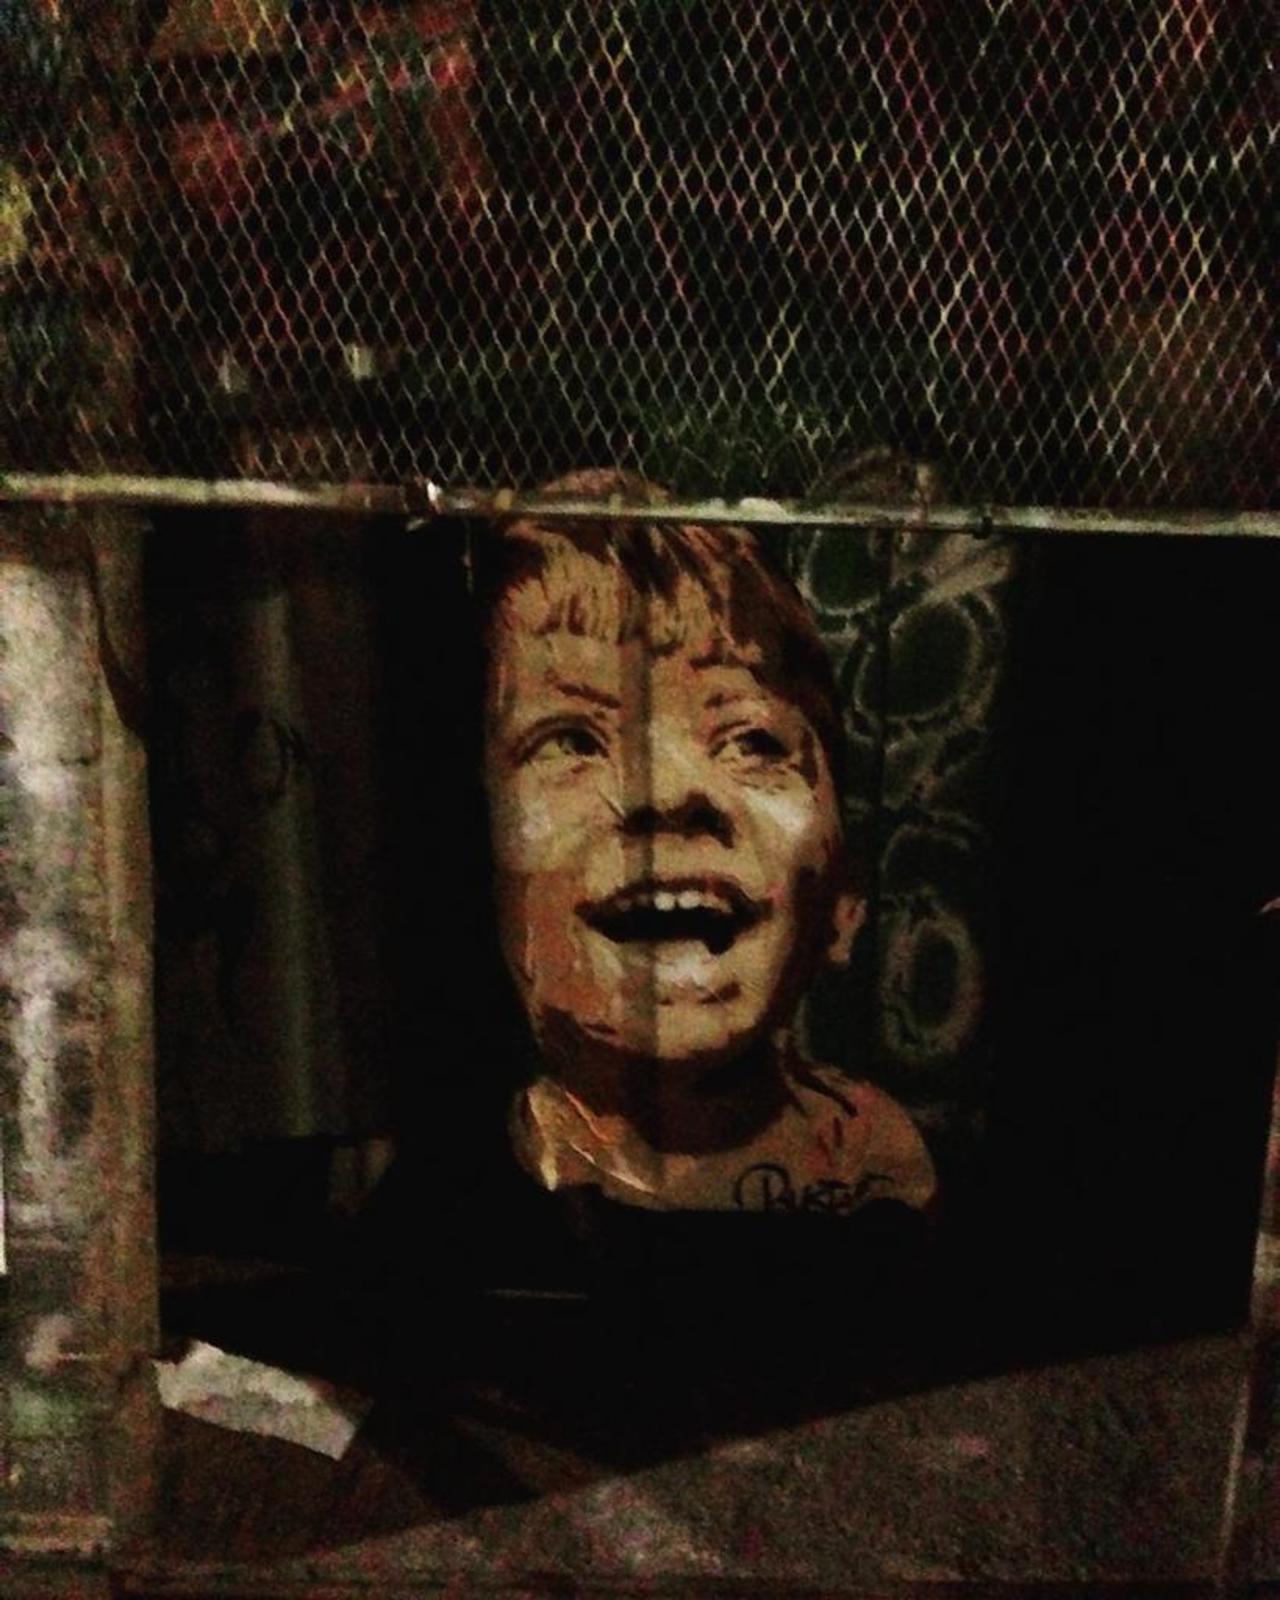 #streetart #durde #streetartParis #parisstreetart #graff #graffiti #streetart_daily #rsa_graffiti by streetrorart https://t.co/Joq3zbuE77